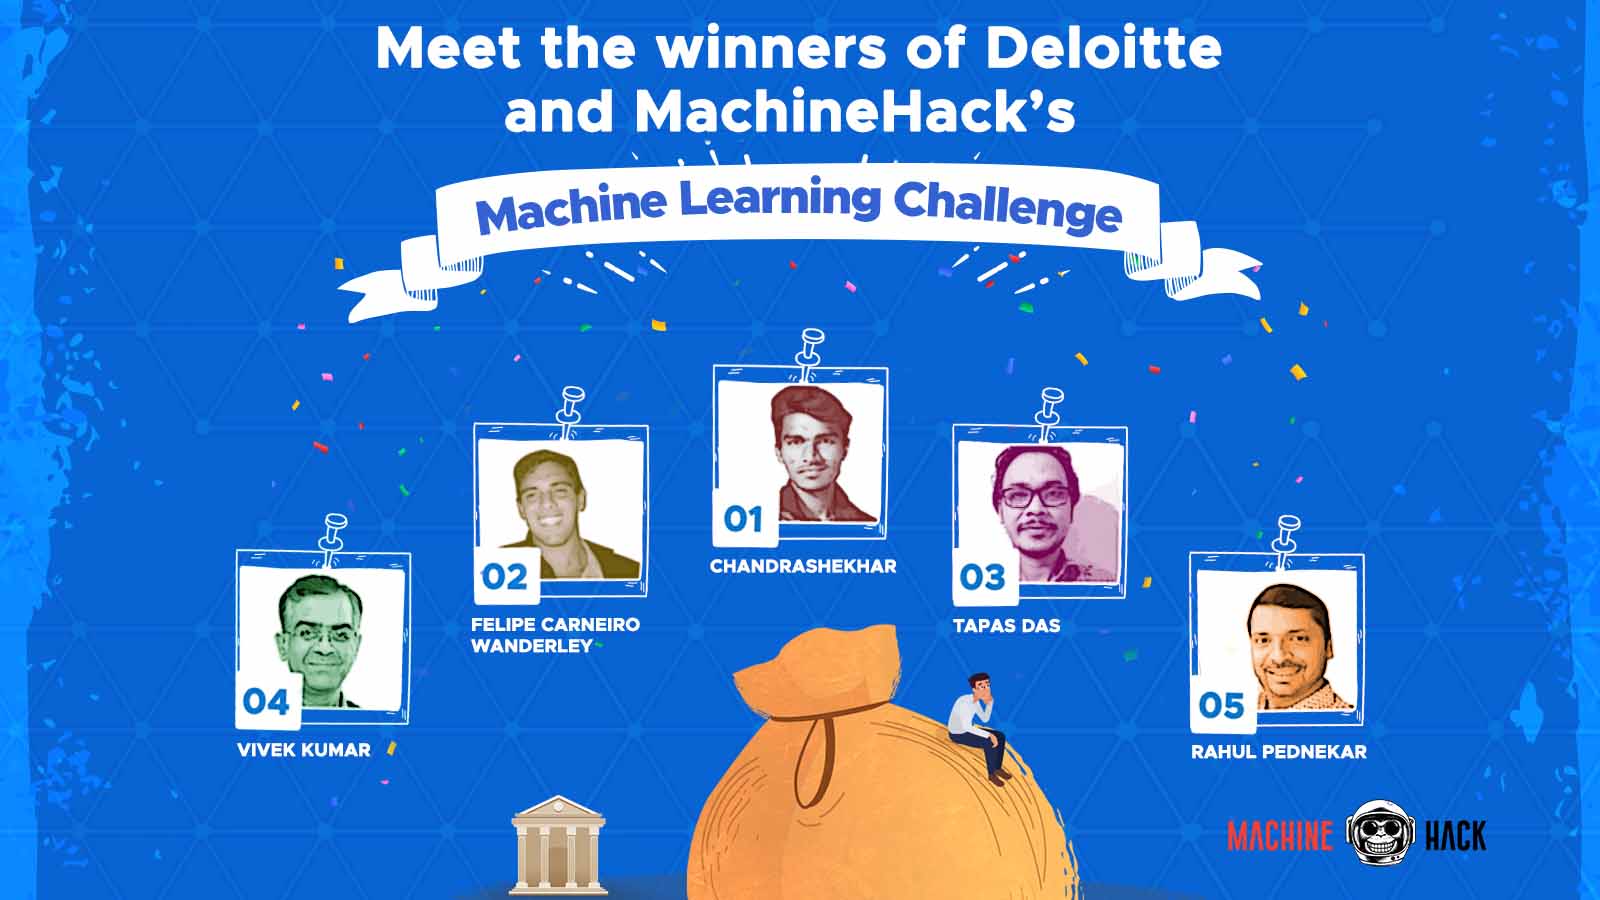 Meet the winners of Deloitte and MachineHack’s “Machine Learning Challenge”